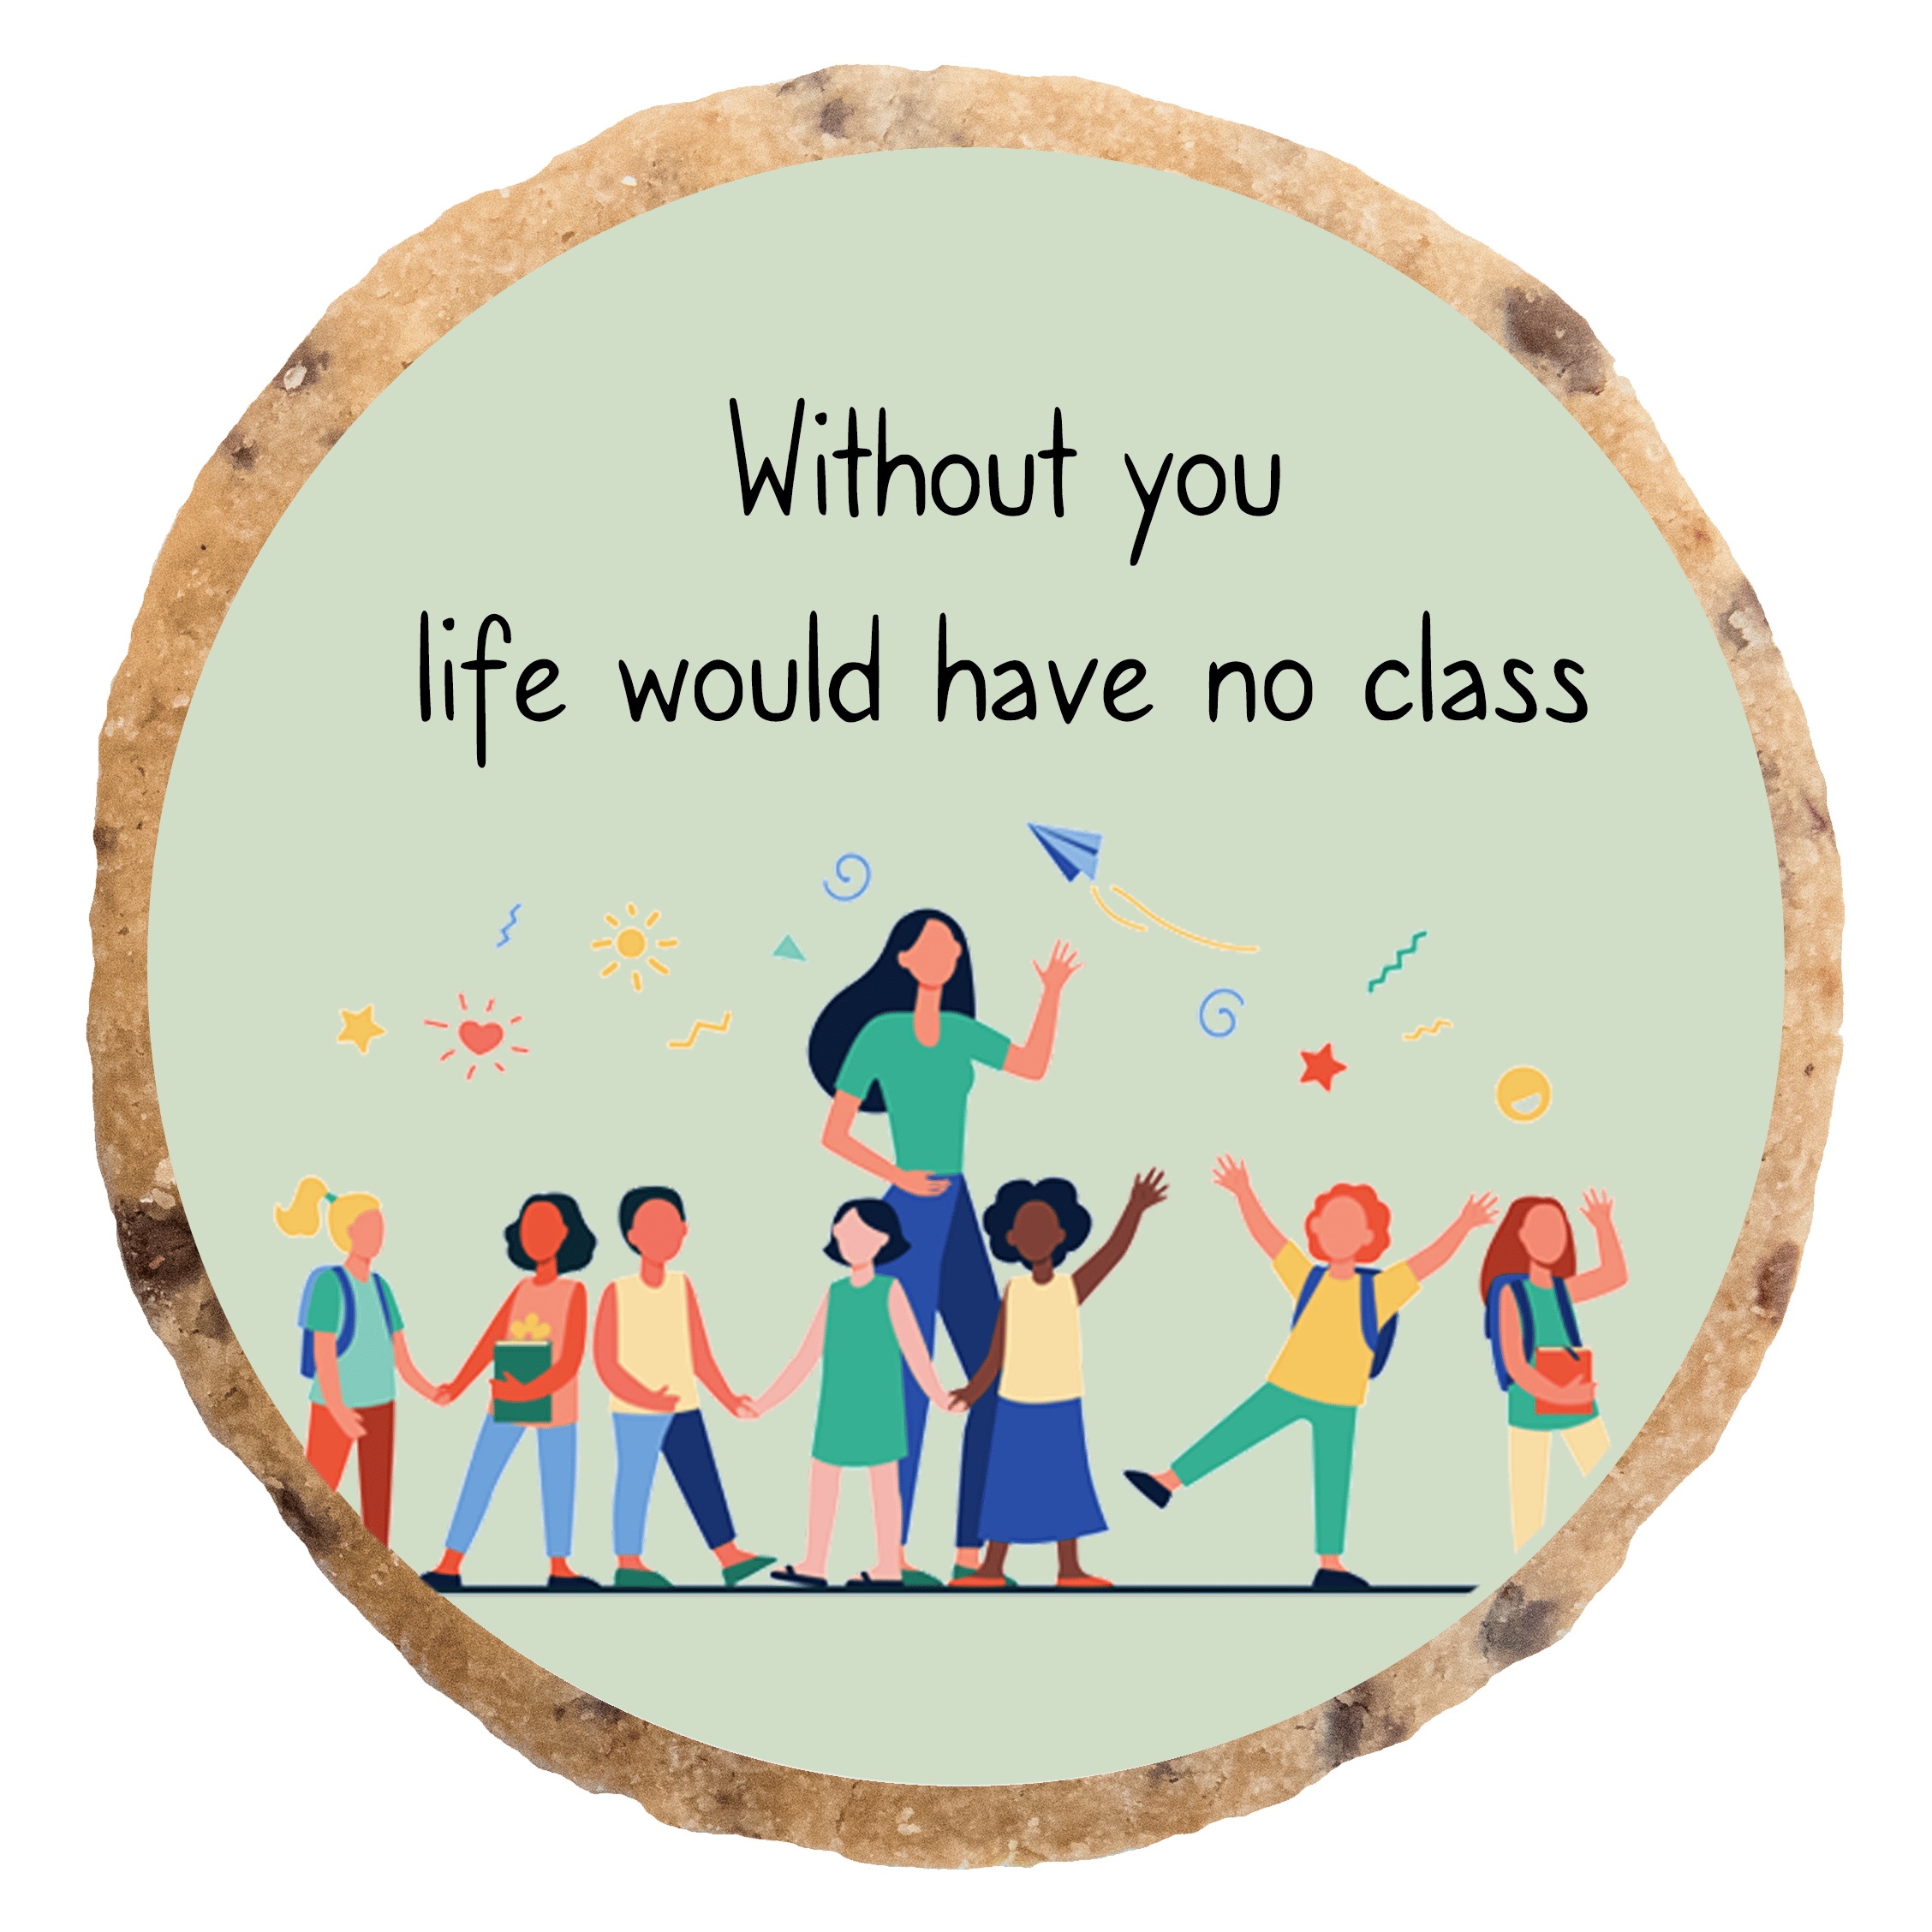 "Life would have no class" MotivKEKS